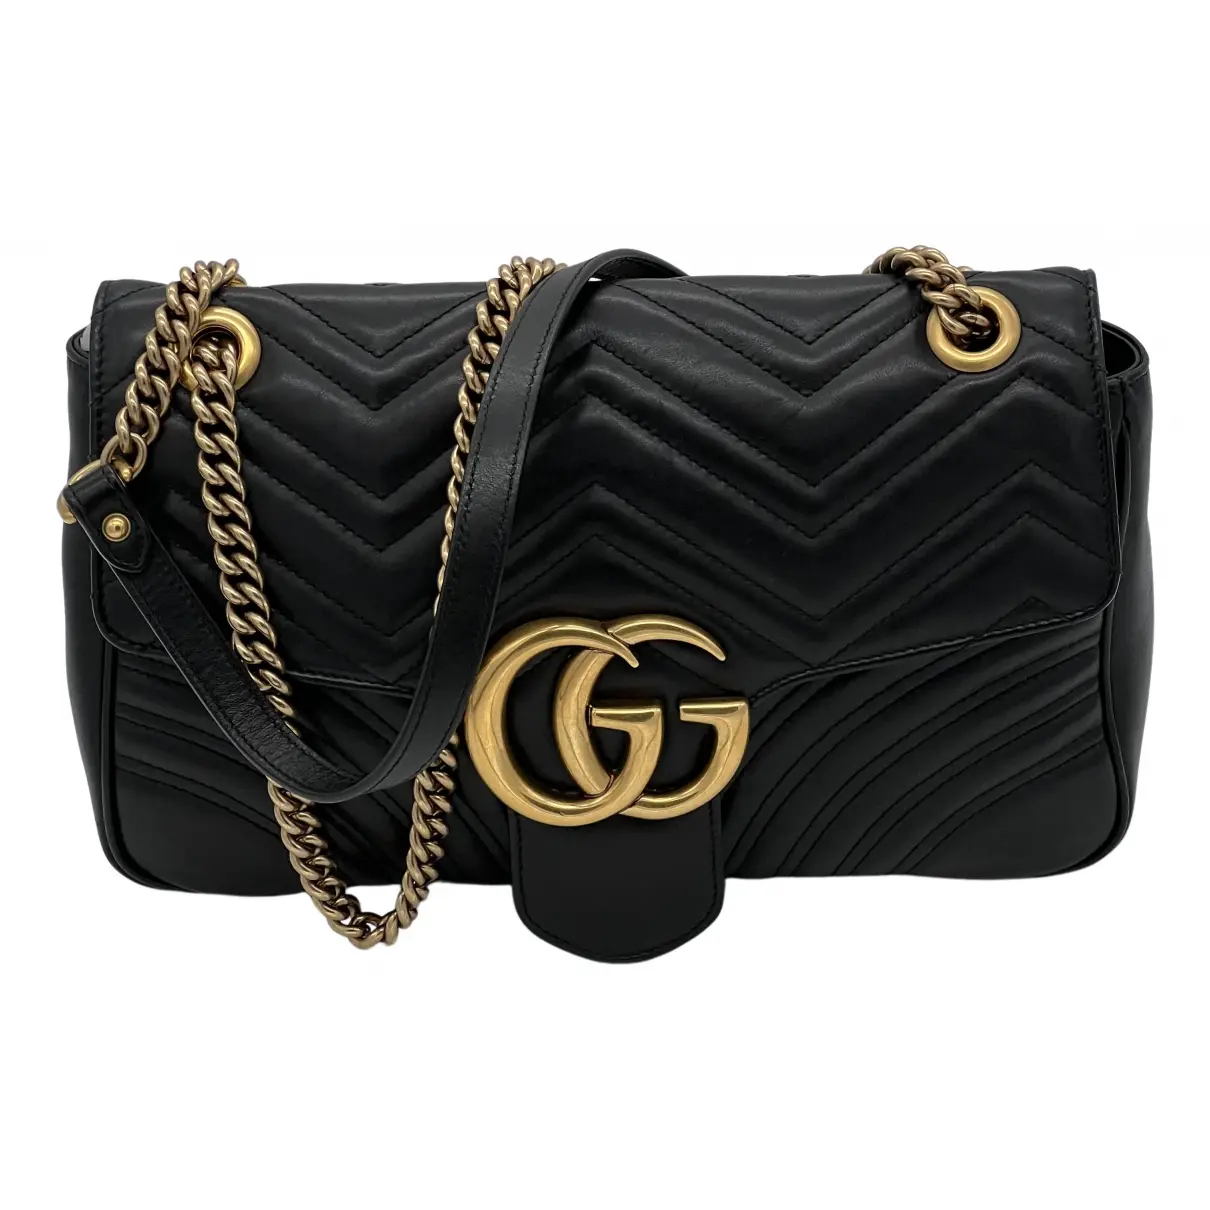 GG Marmont Chain Flap leather handbag Gucci